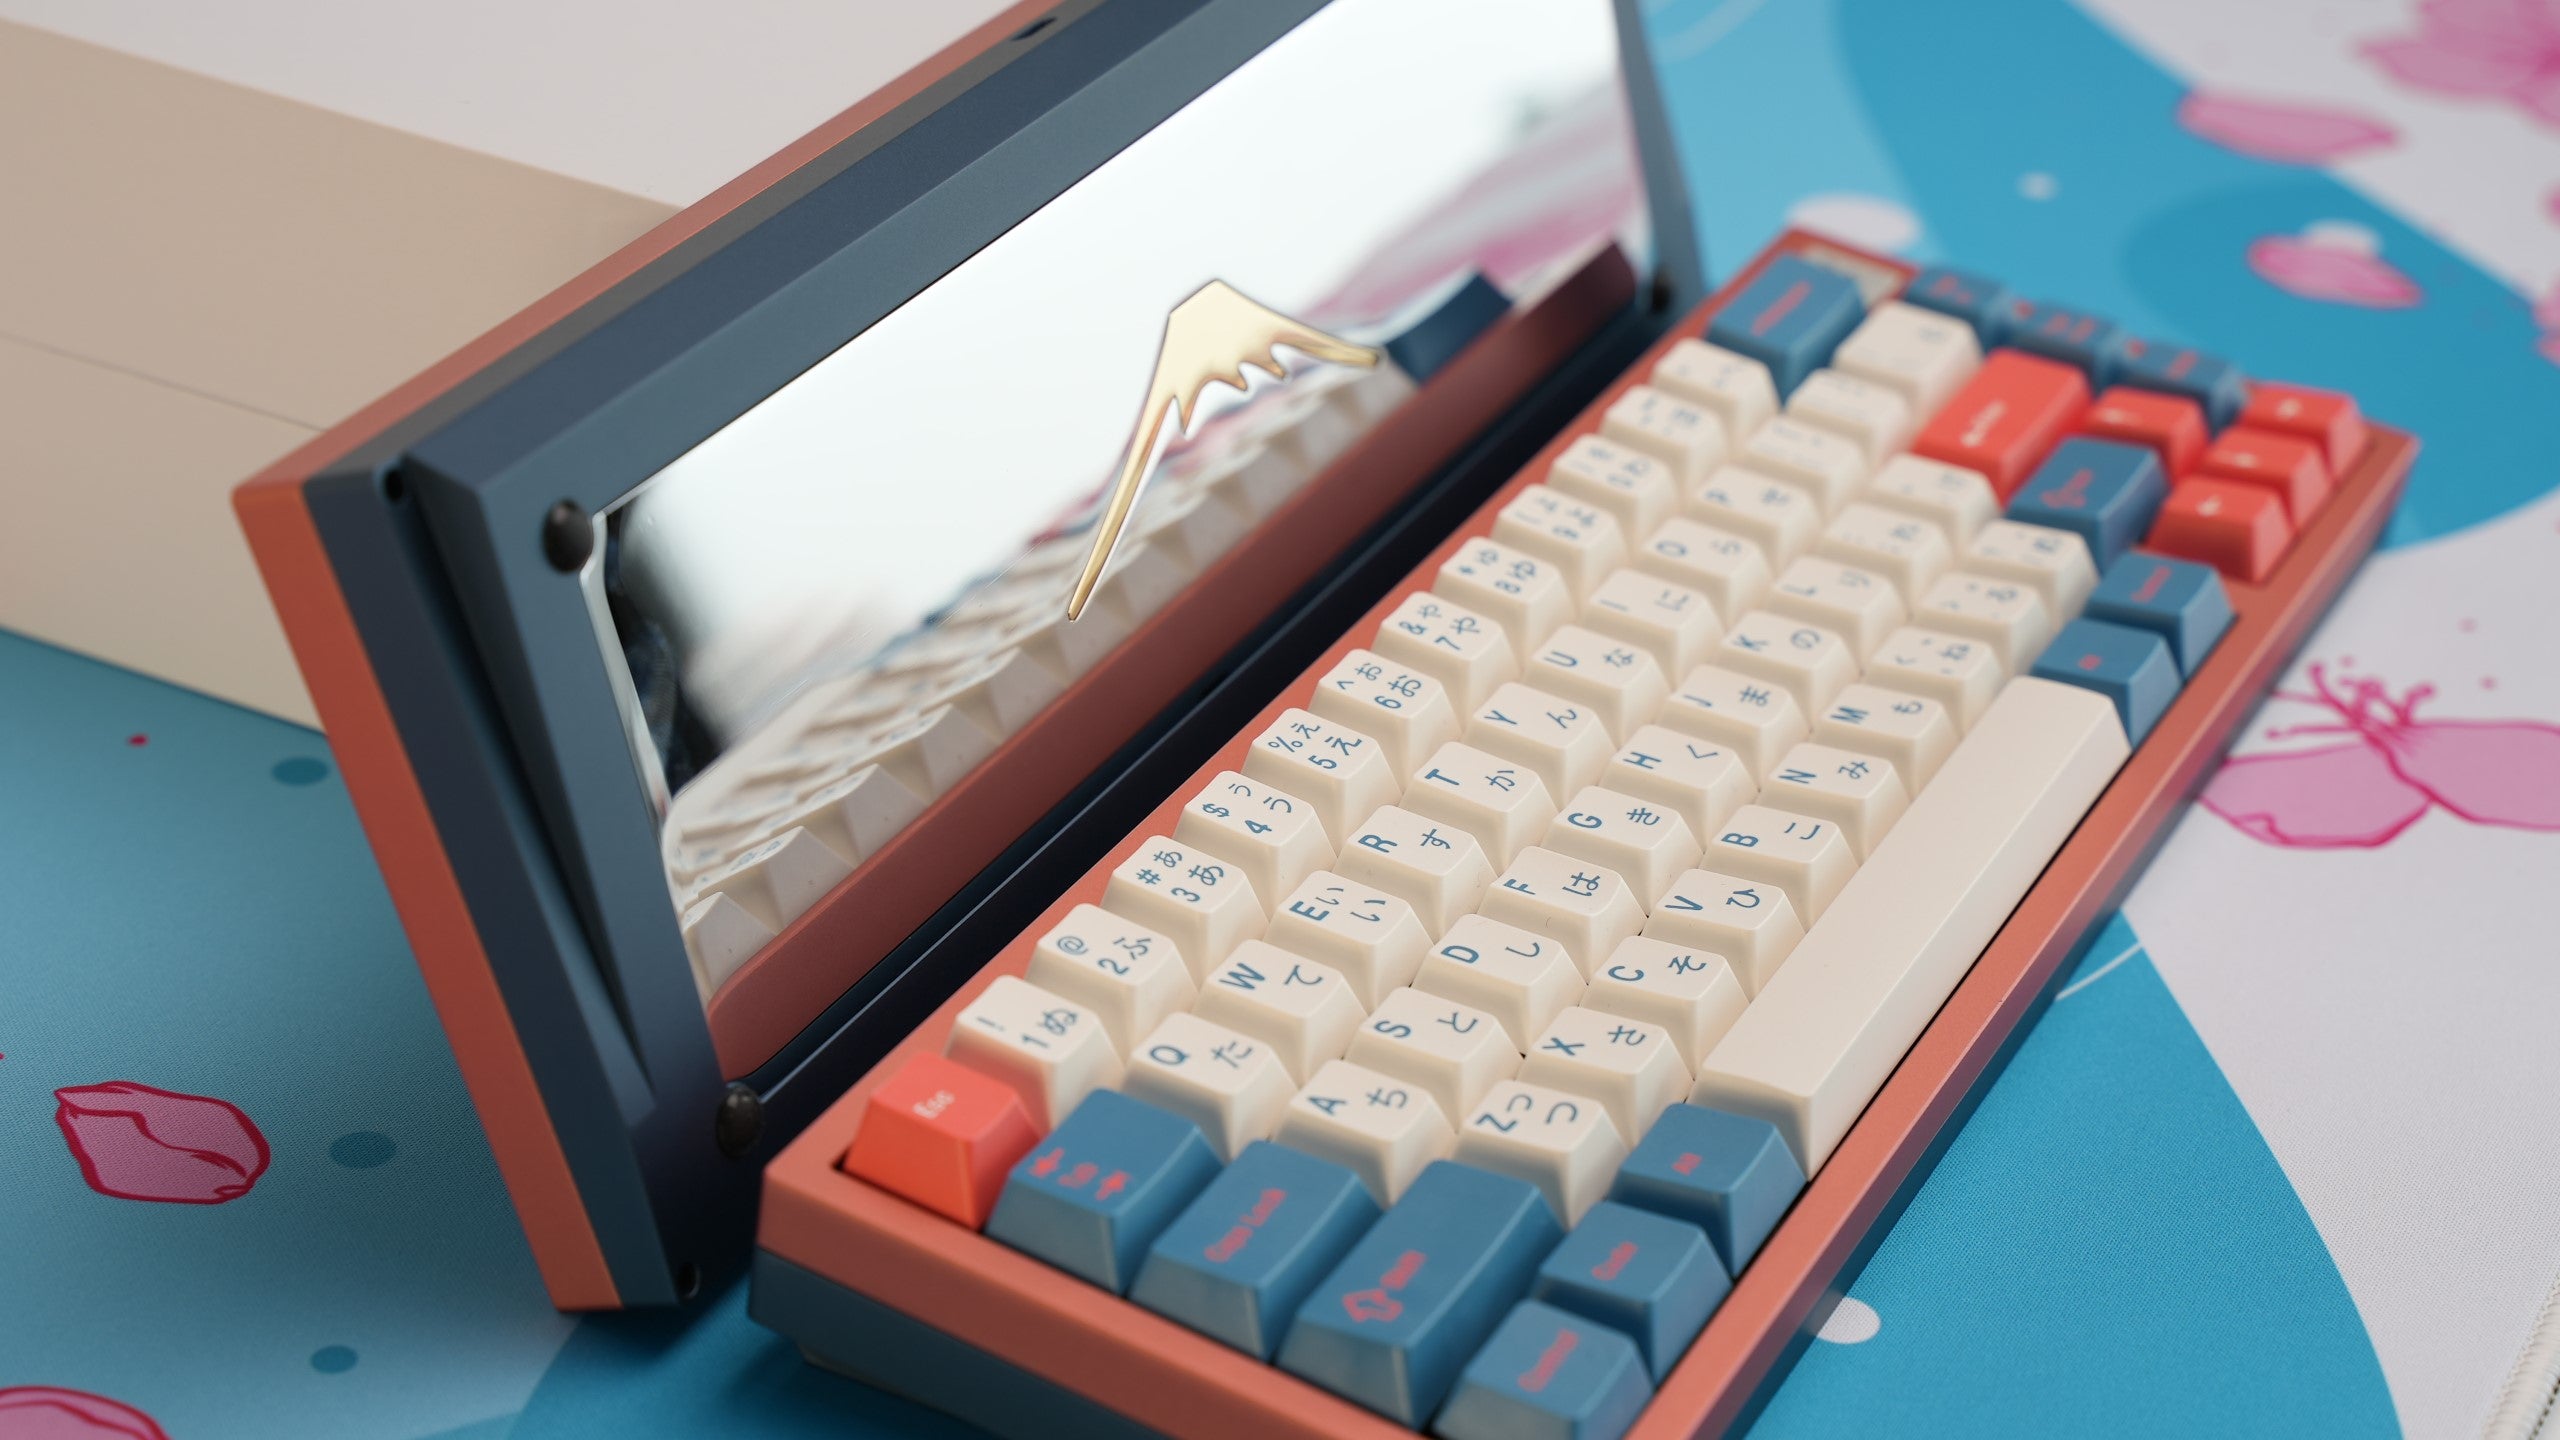 Fuji 65v2 Swirl Keyboard - Bento Box